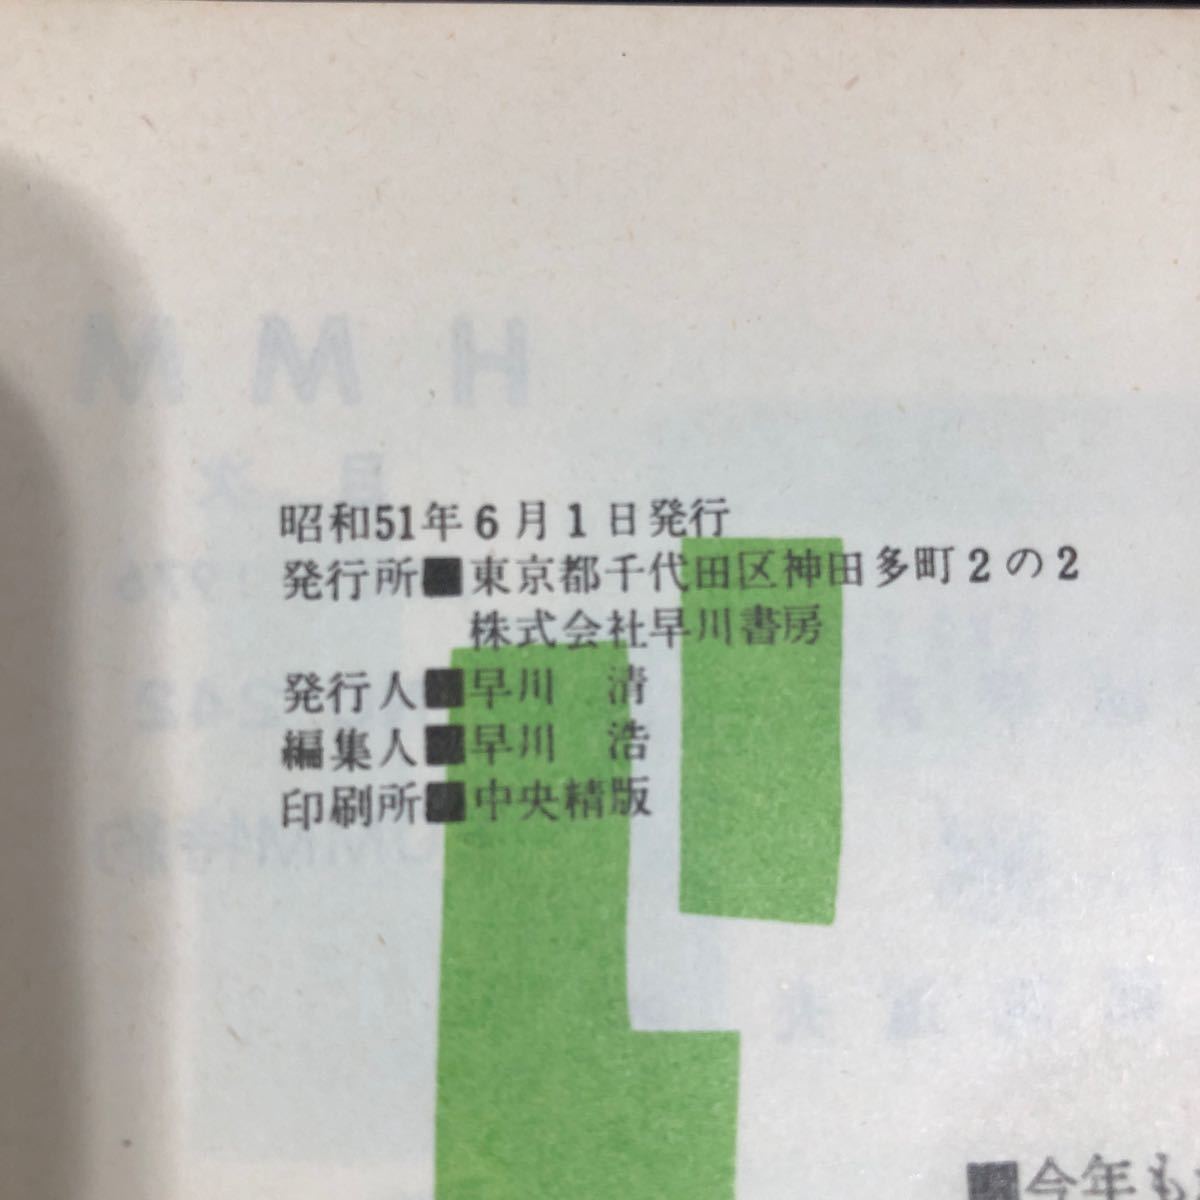 ne84 mistake teli magazine 1976 year 6 month number . river bookstore Showa era 51 year novel literary art thought history economics essay genuine article language 